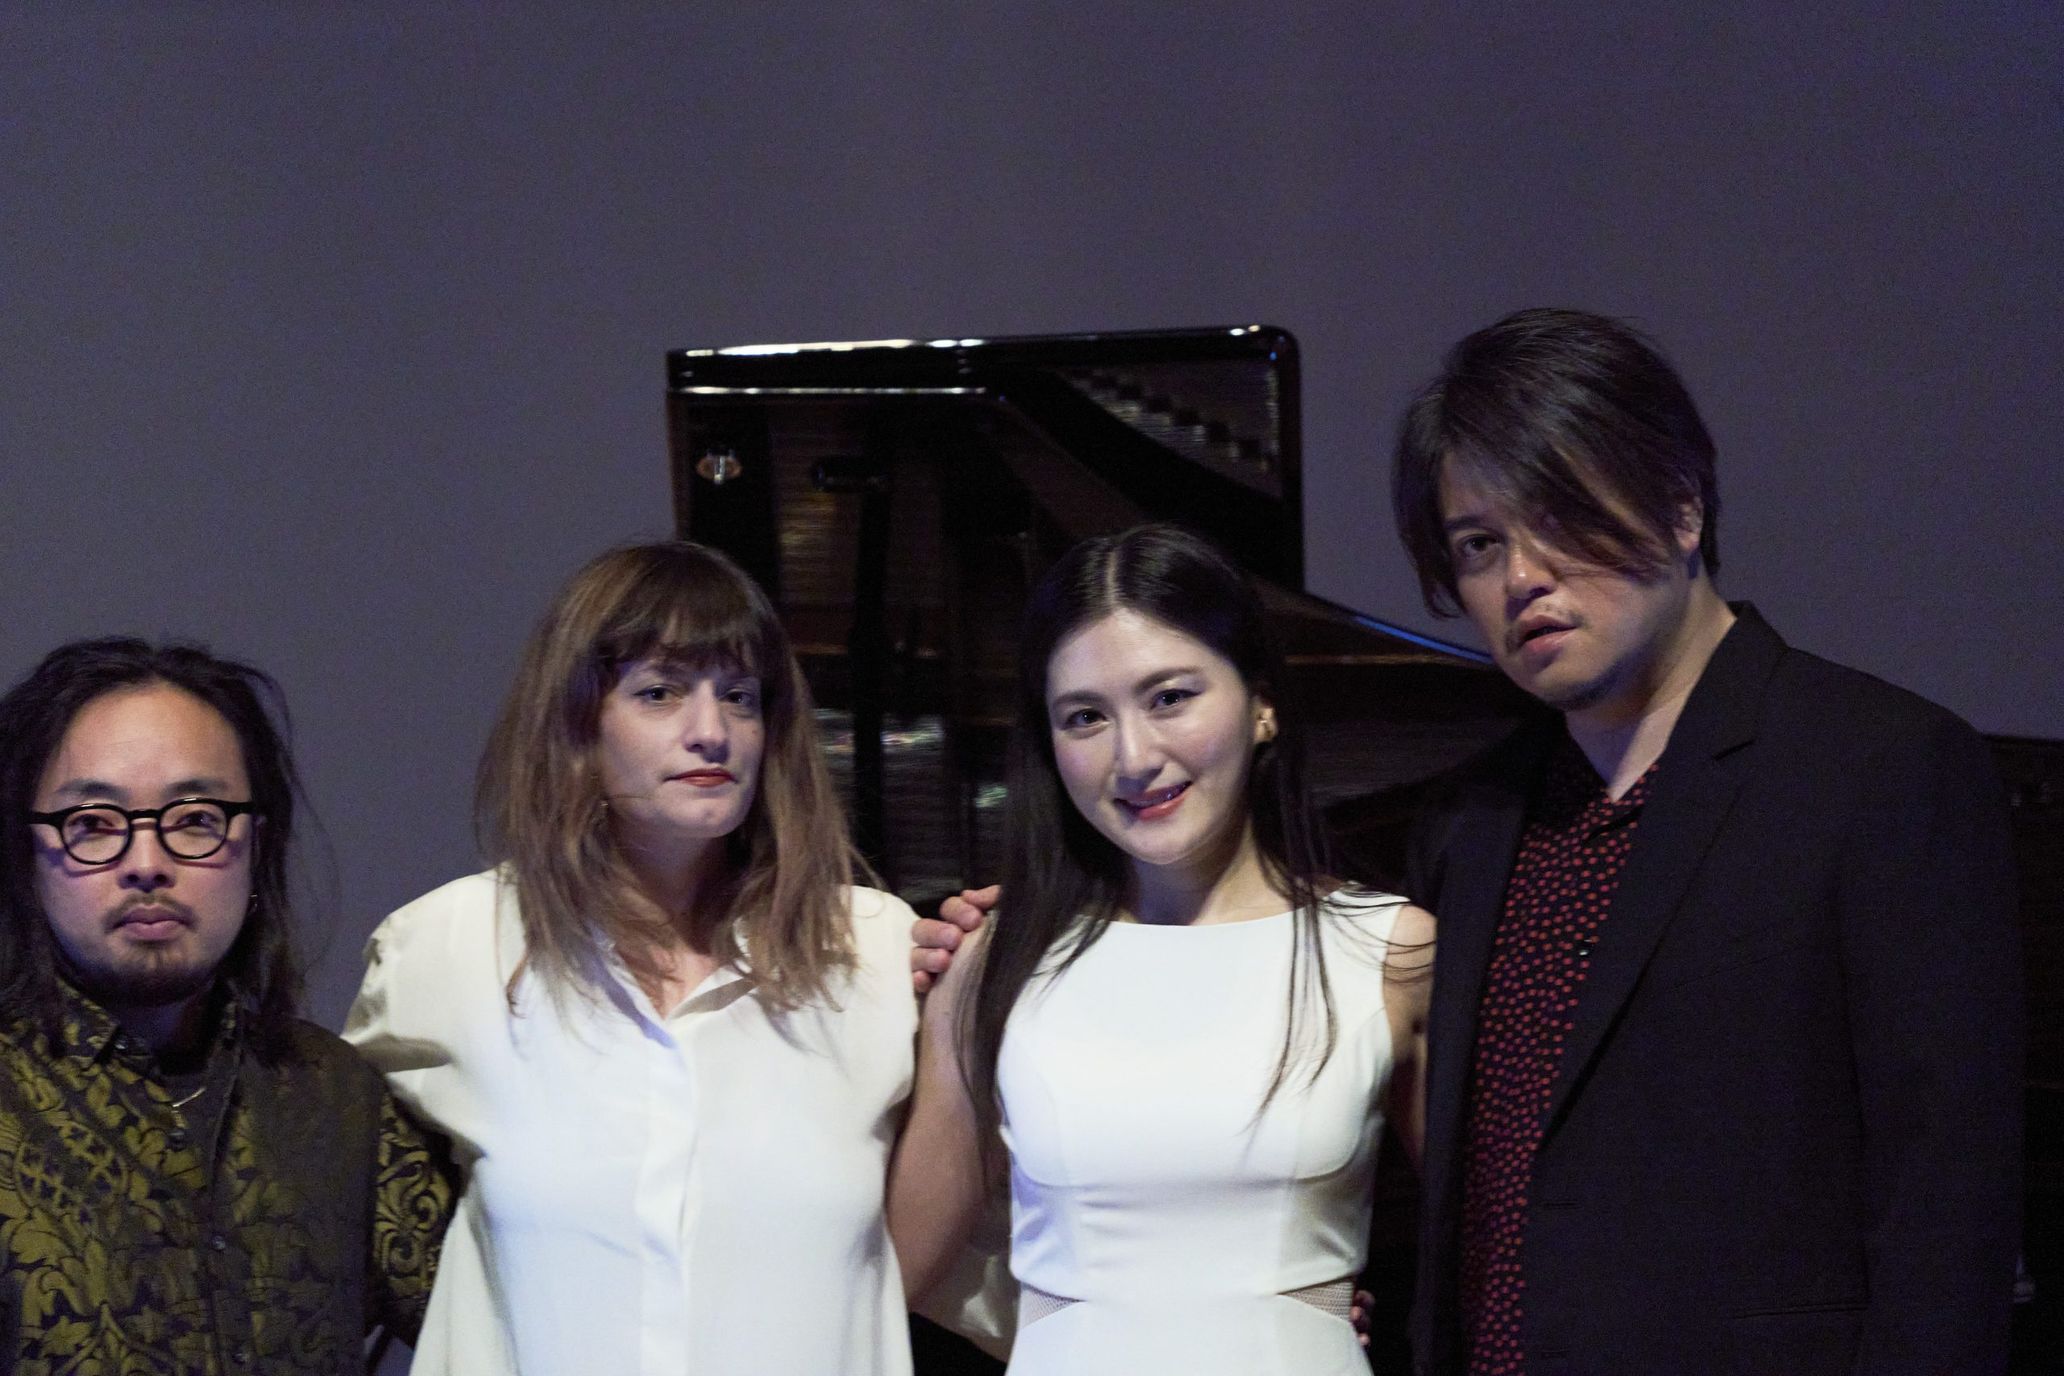 Left to Right: Shin Sasakubo, Justine Emard, Ayako Tanaka, Keiichiro Shibuya
Photography Kenshu Shintsubo